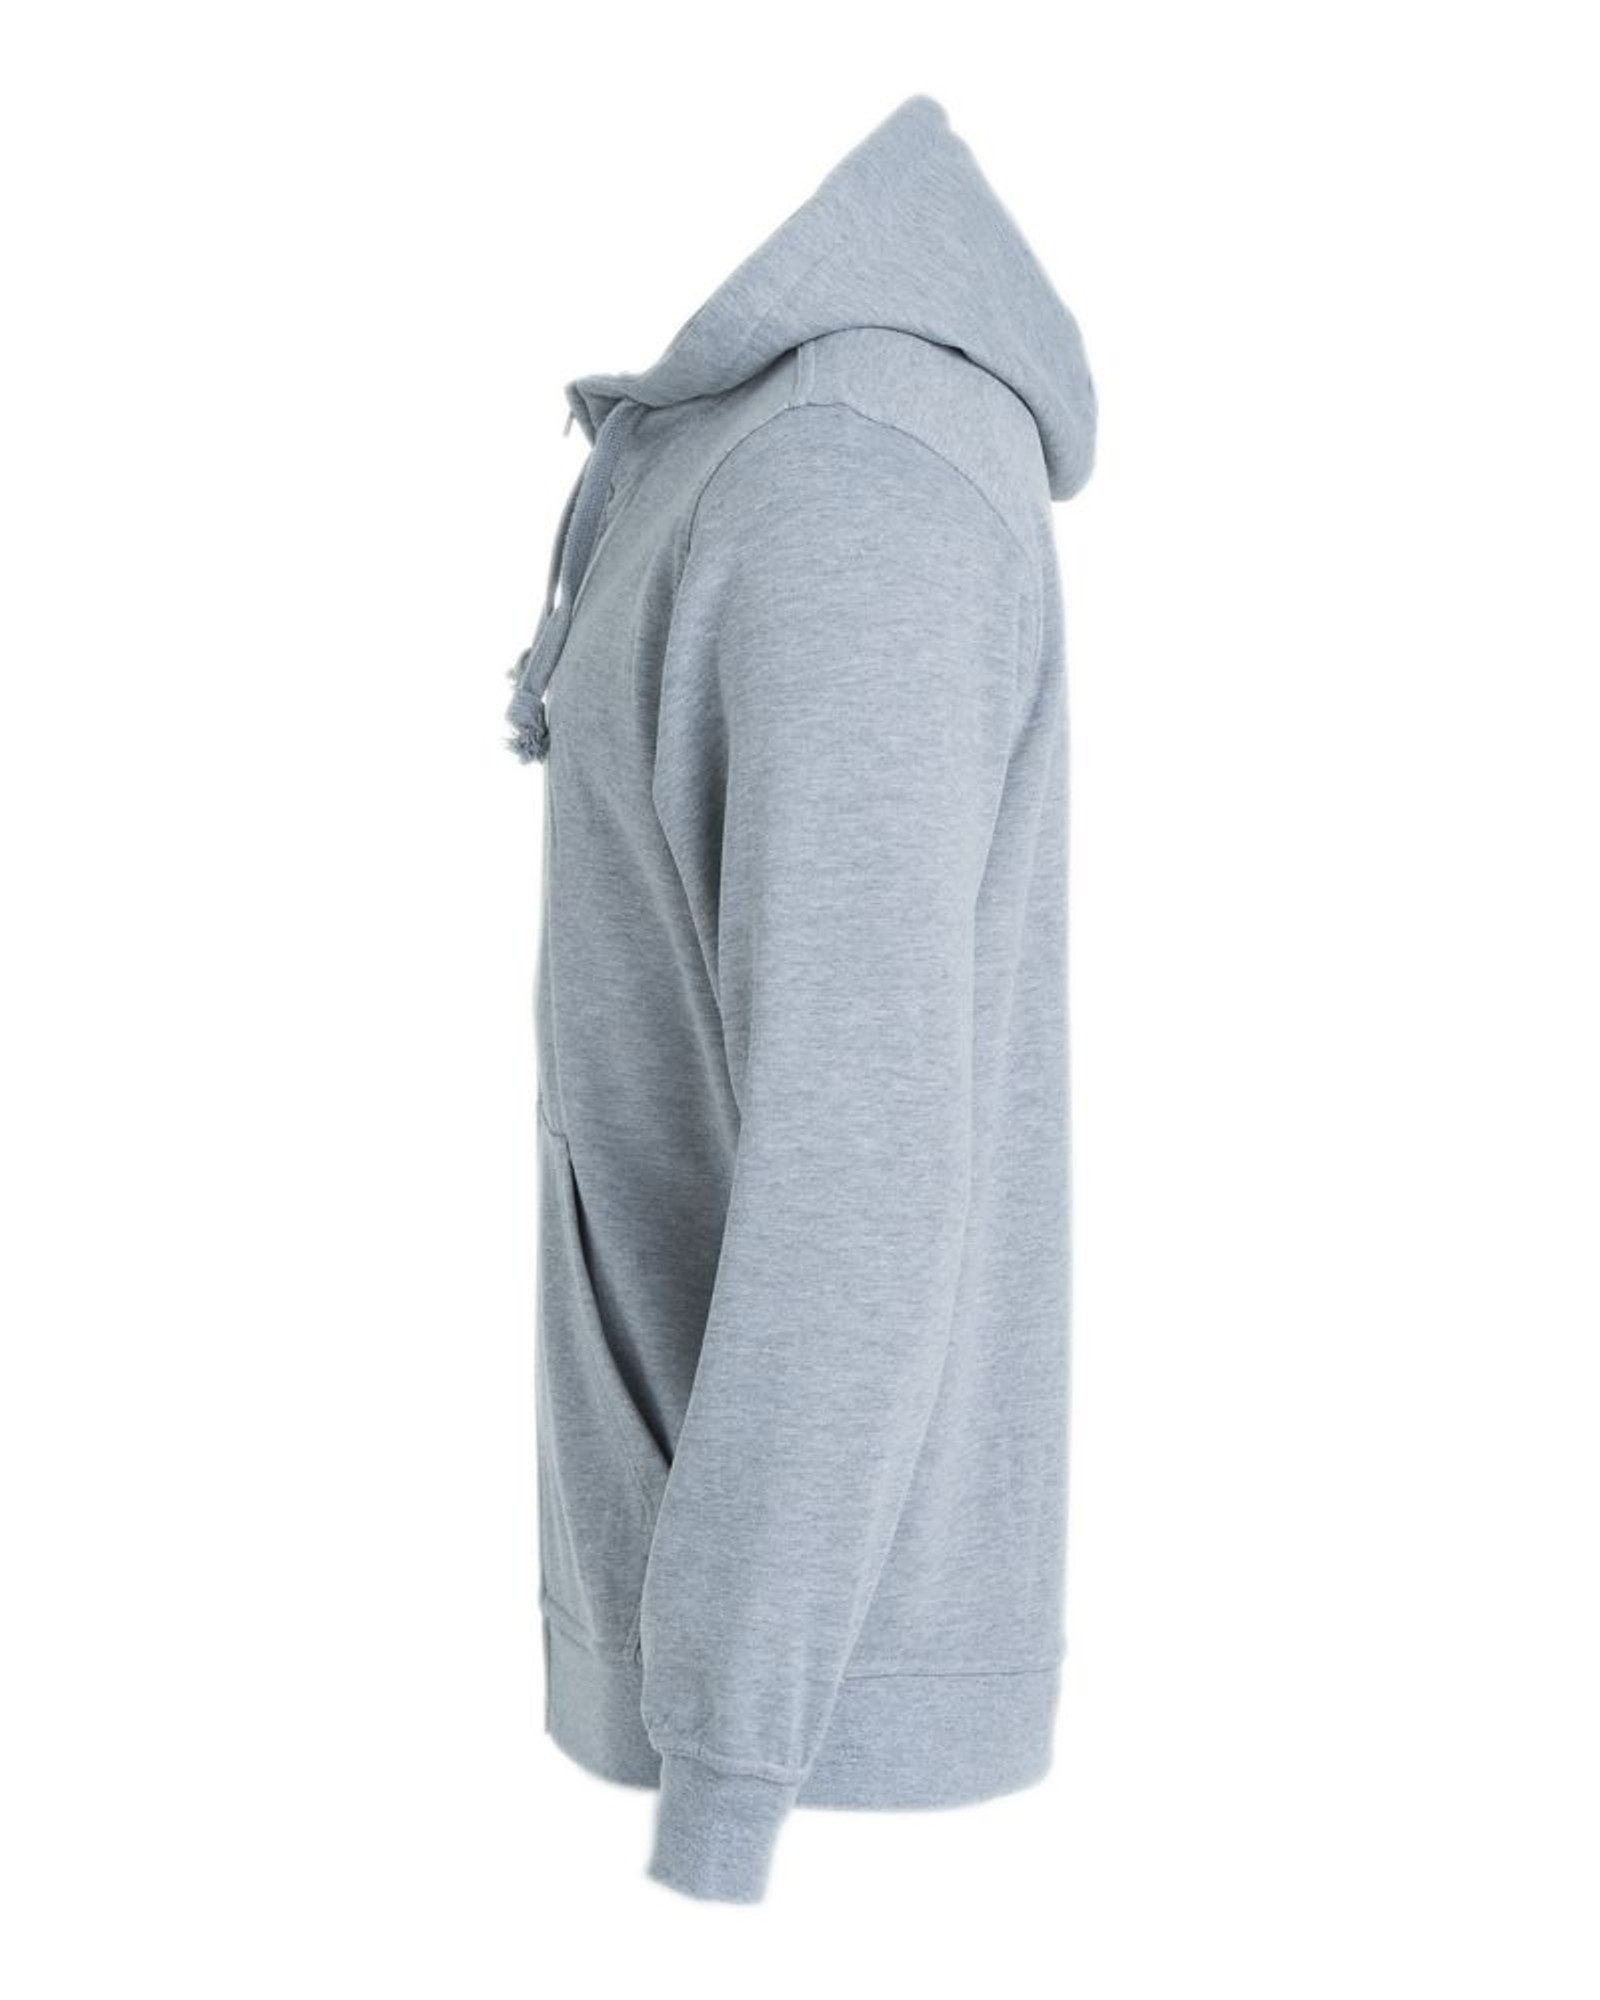 Unisex Stockholm by Clique hoodie full zip Sweatshirt